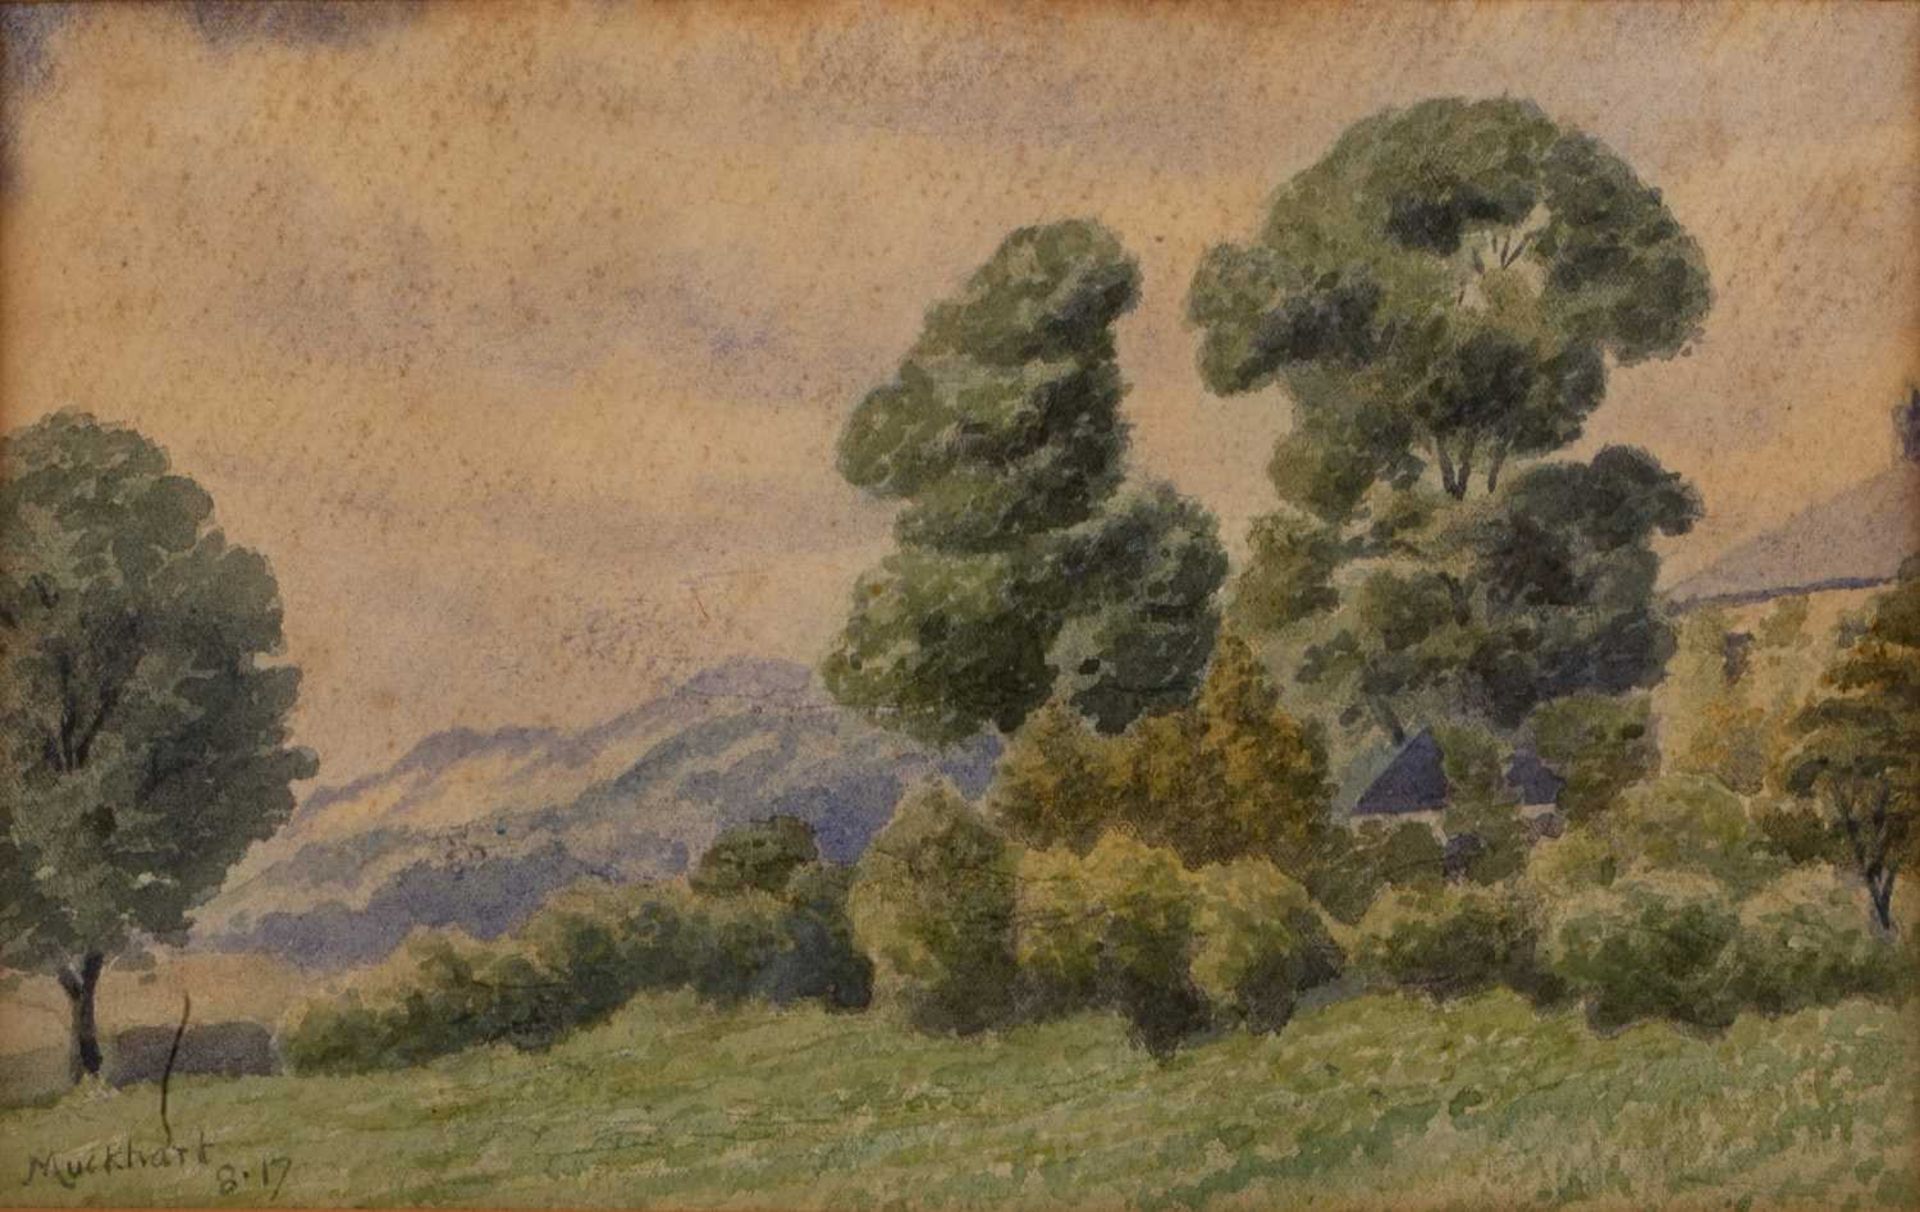 Muckhart (20th Century English School) untitled landscape, watercolour, signed lower left, 15cm x - Image 6 of 6